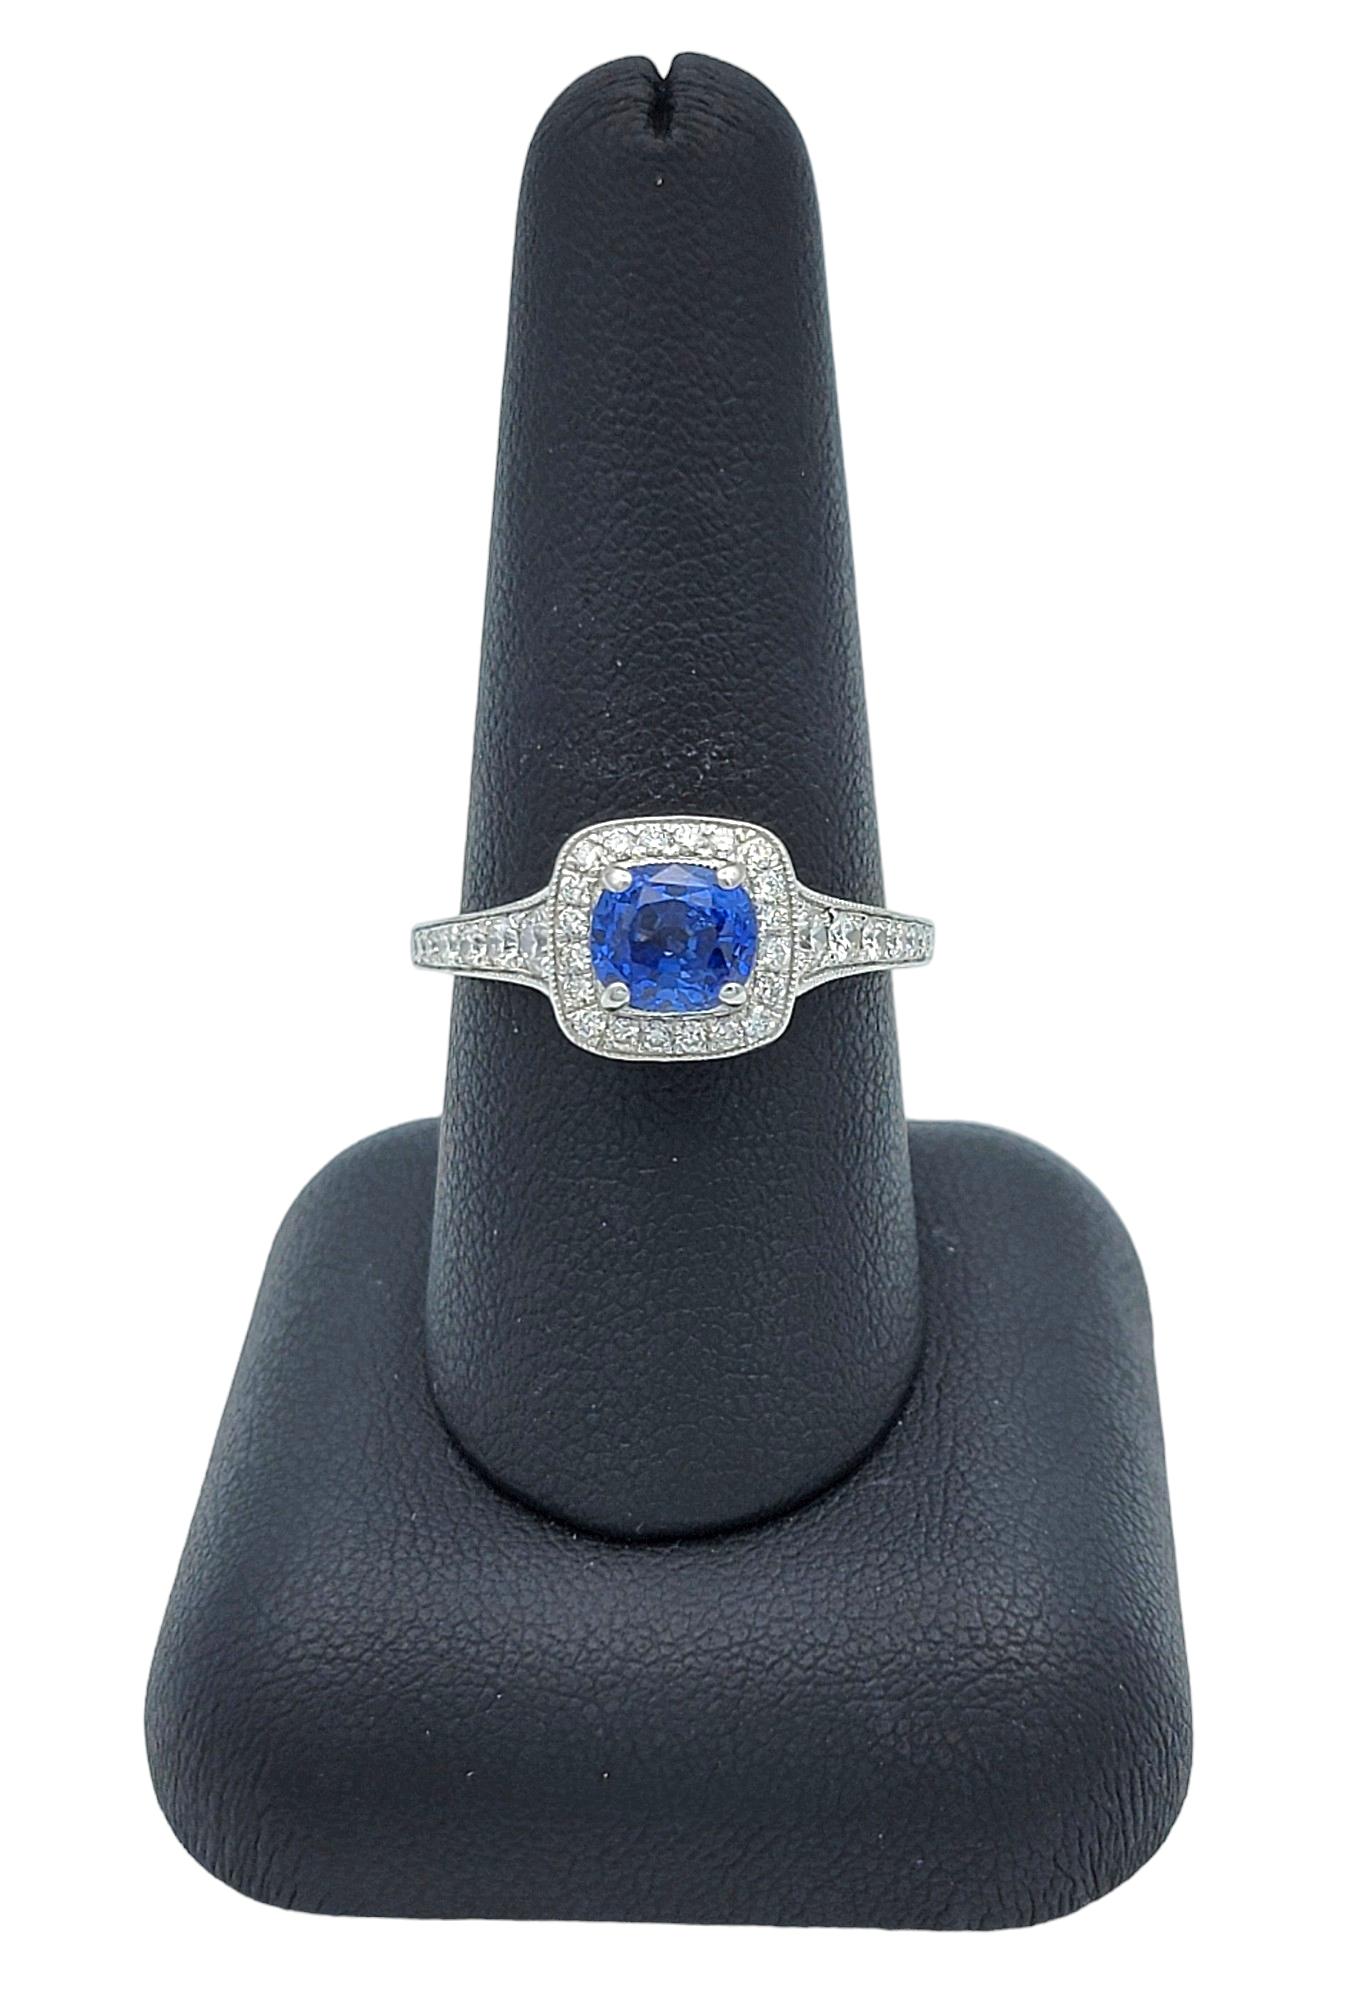 Gabriel & Co. Cushion Cut Blue Sapphire Diamond Halo Ring in 14 Karat White Gold For Sale 6